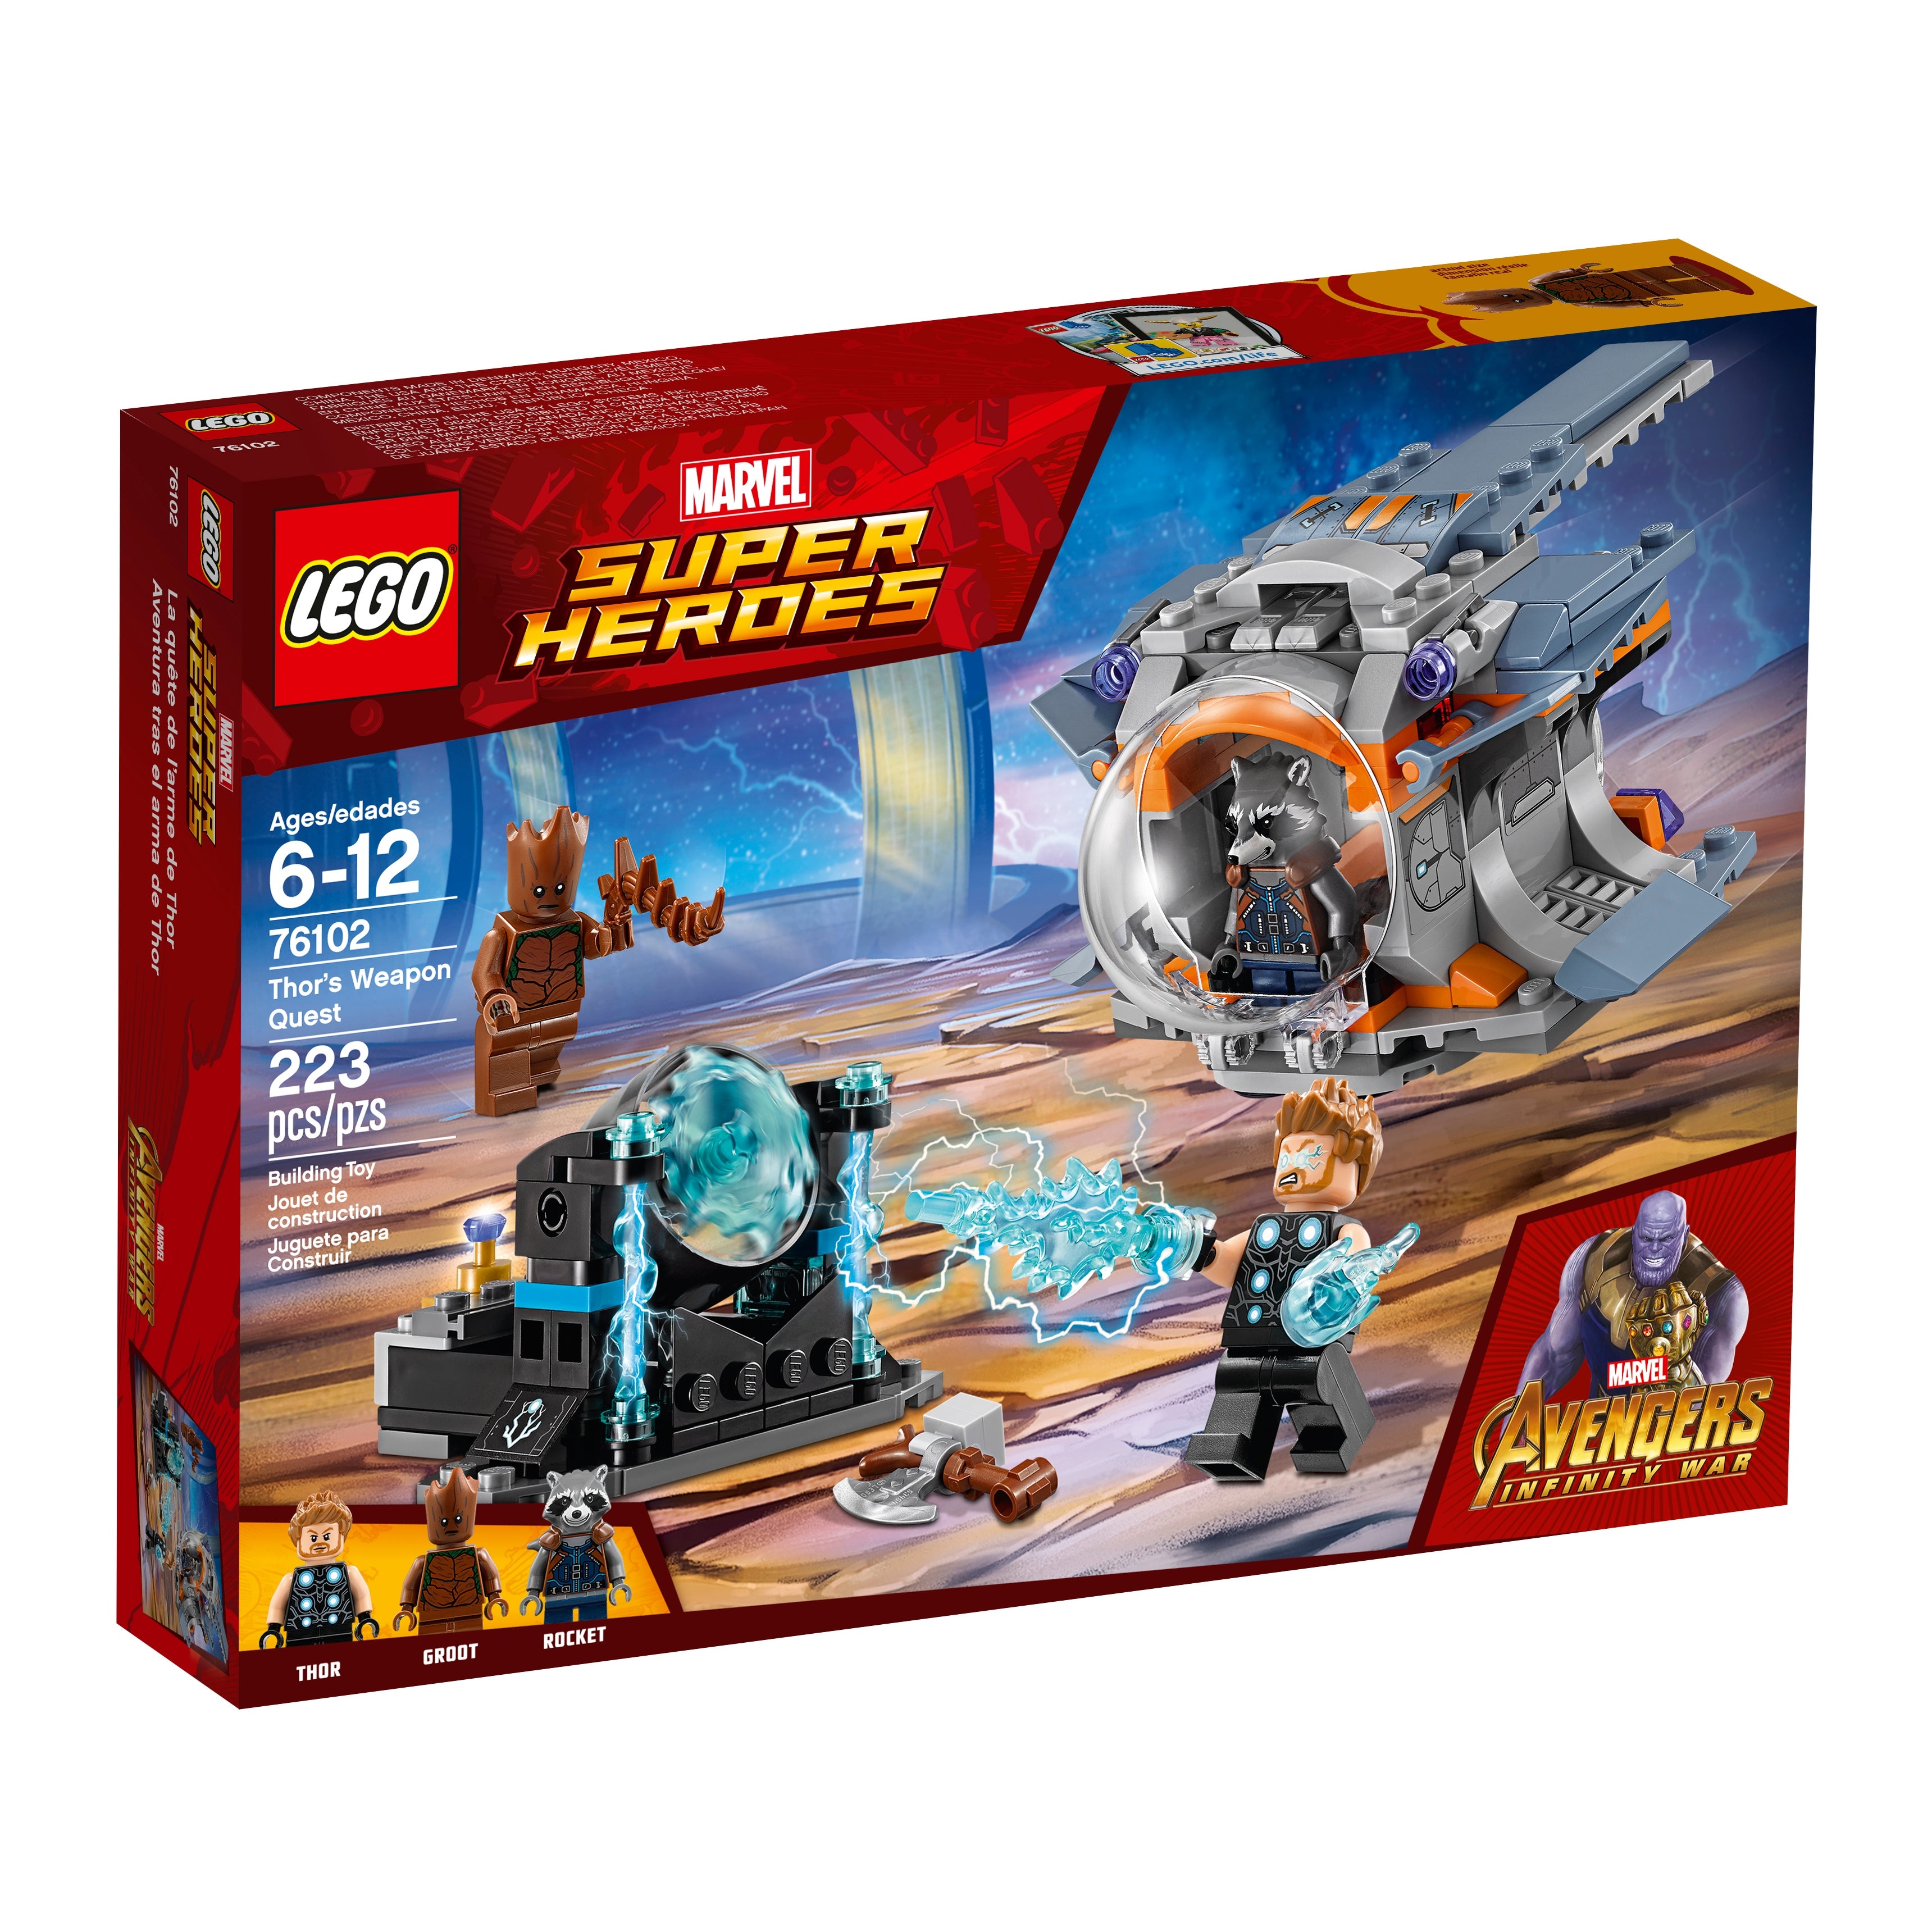 LEGO Marvel Super Heroes Infinity War Thor Minifigure 76102